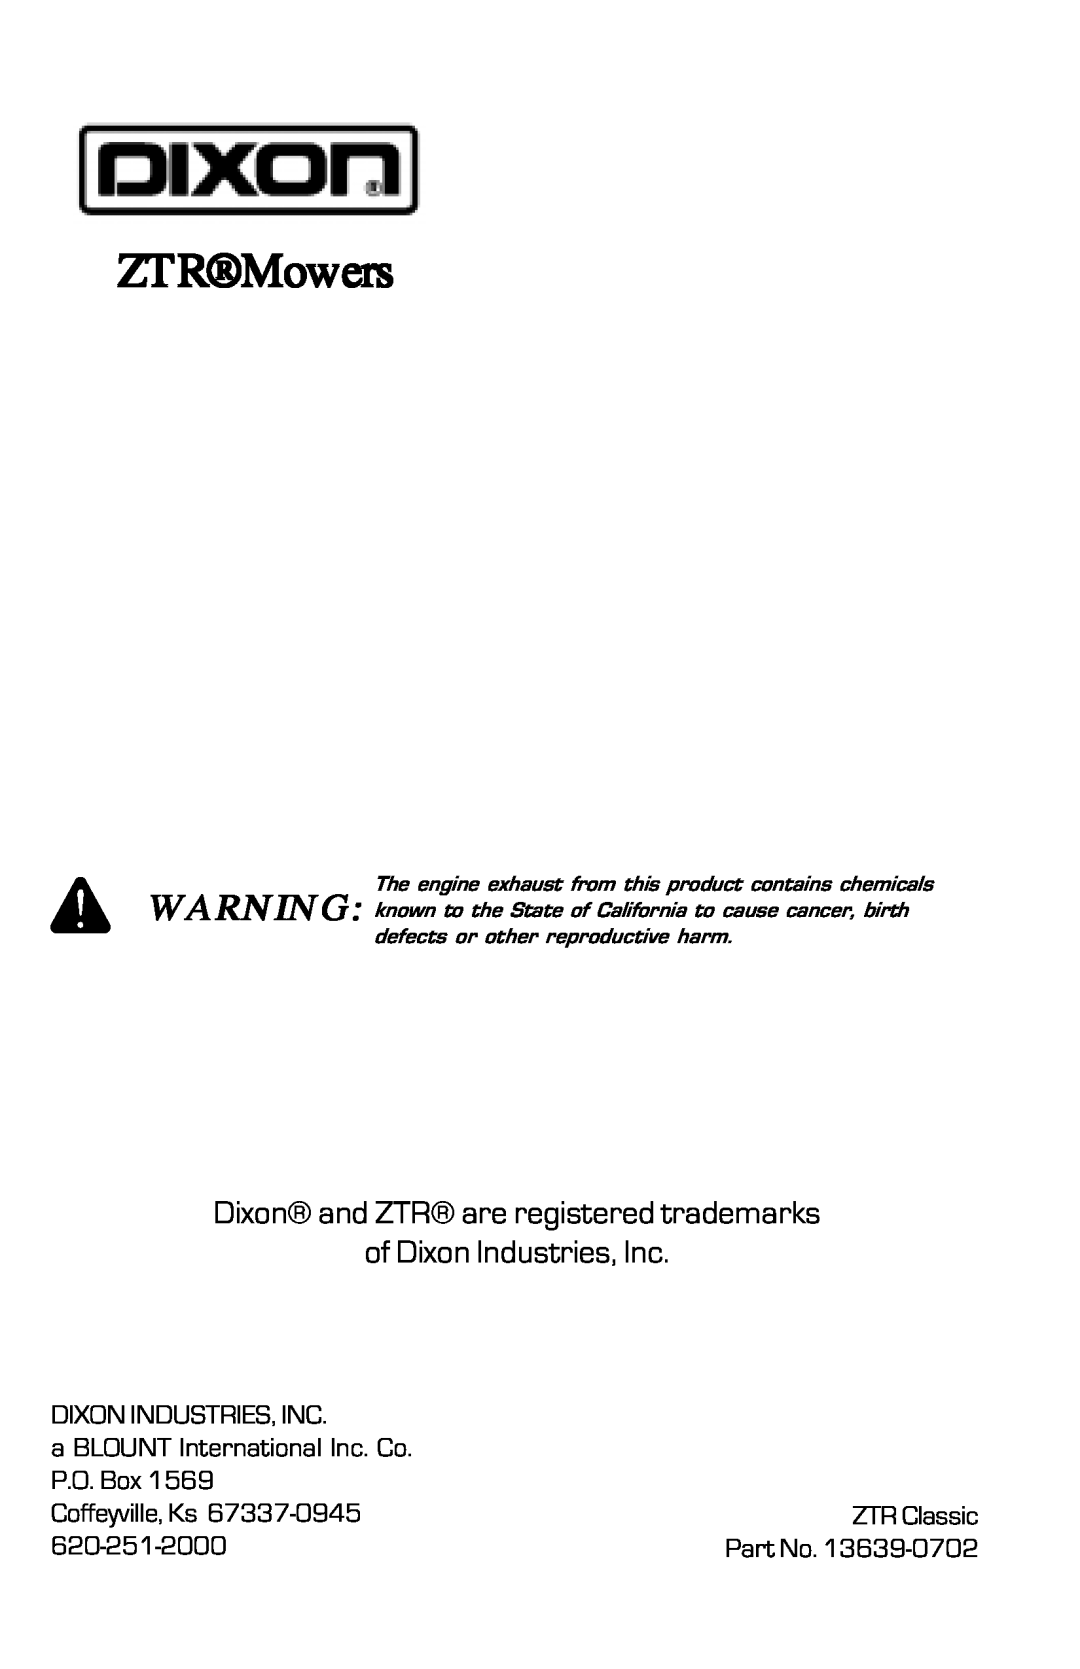 Dixon 2003, 13639-0702 ZTRMowers, Dixon and ZTR are registered trademarks, of Dixon Industries, Inc, ZTR Classic Part No 